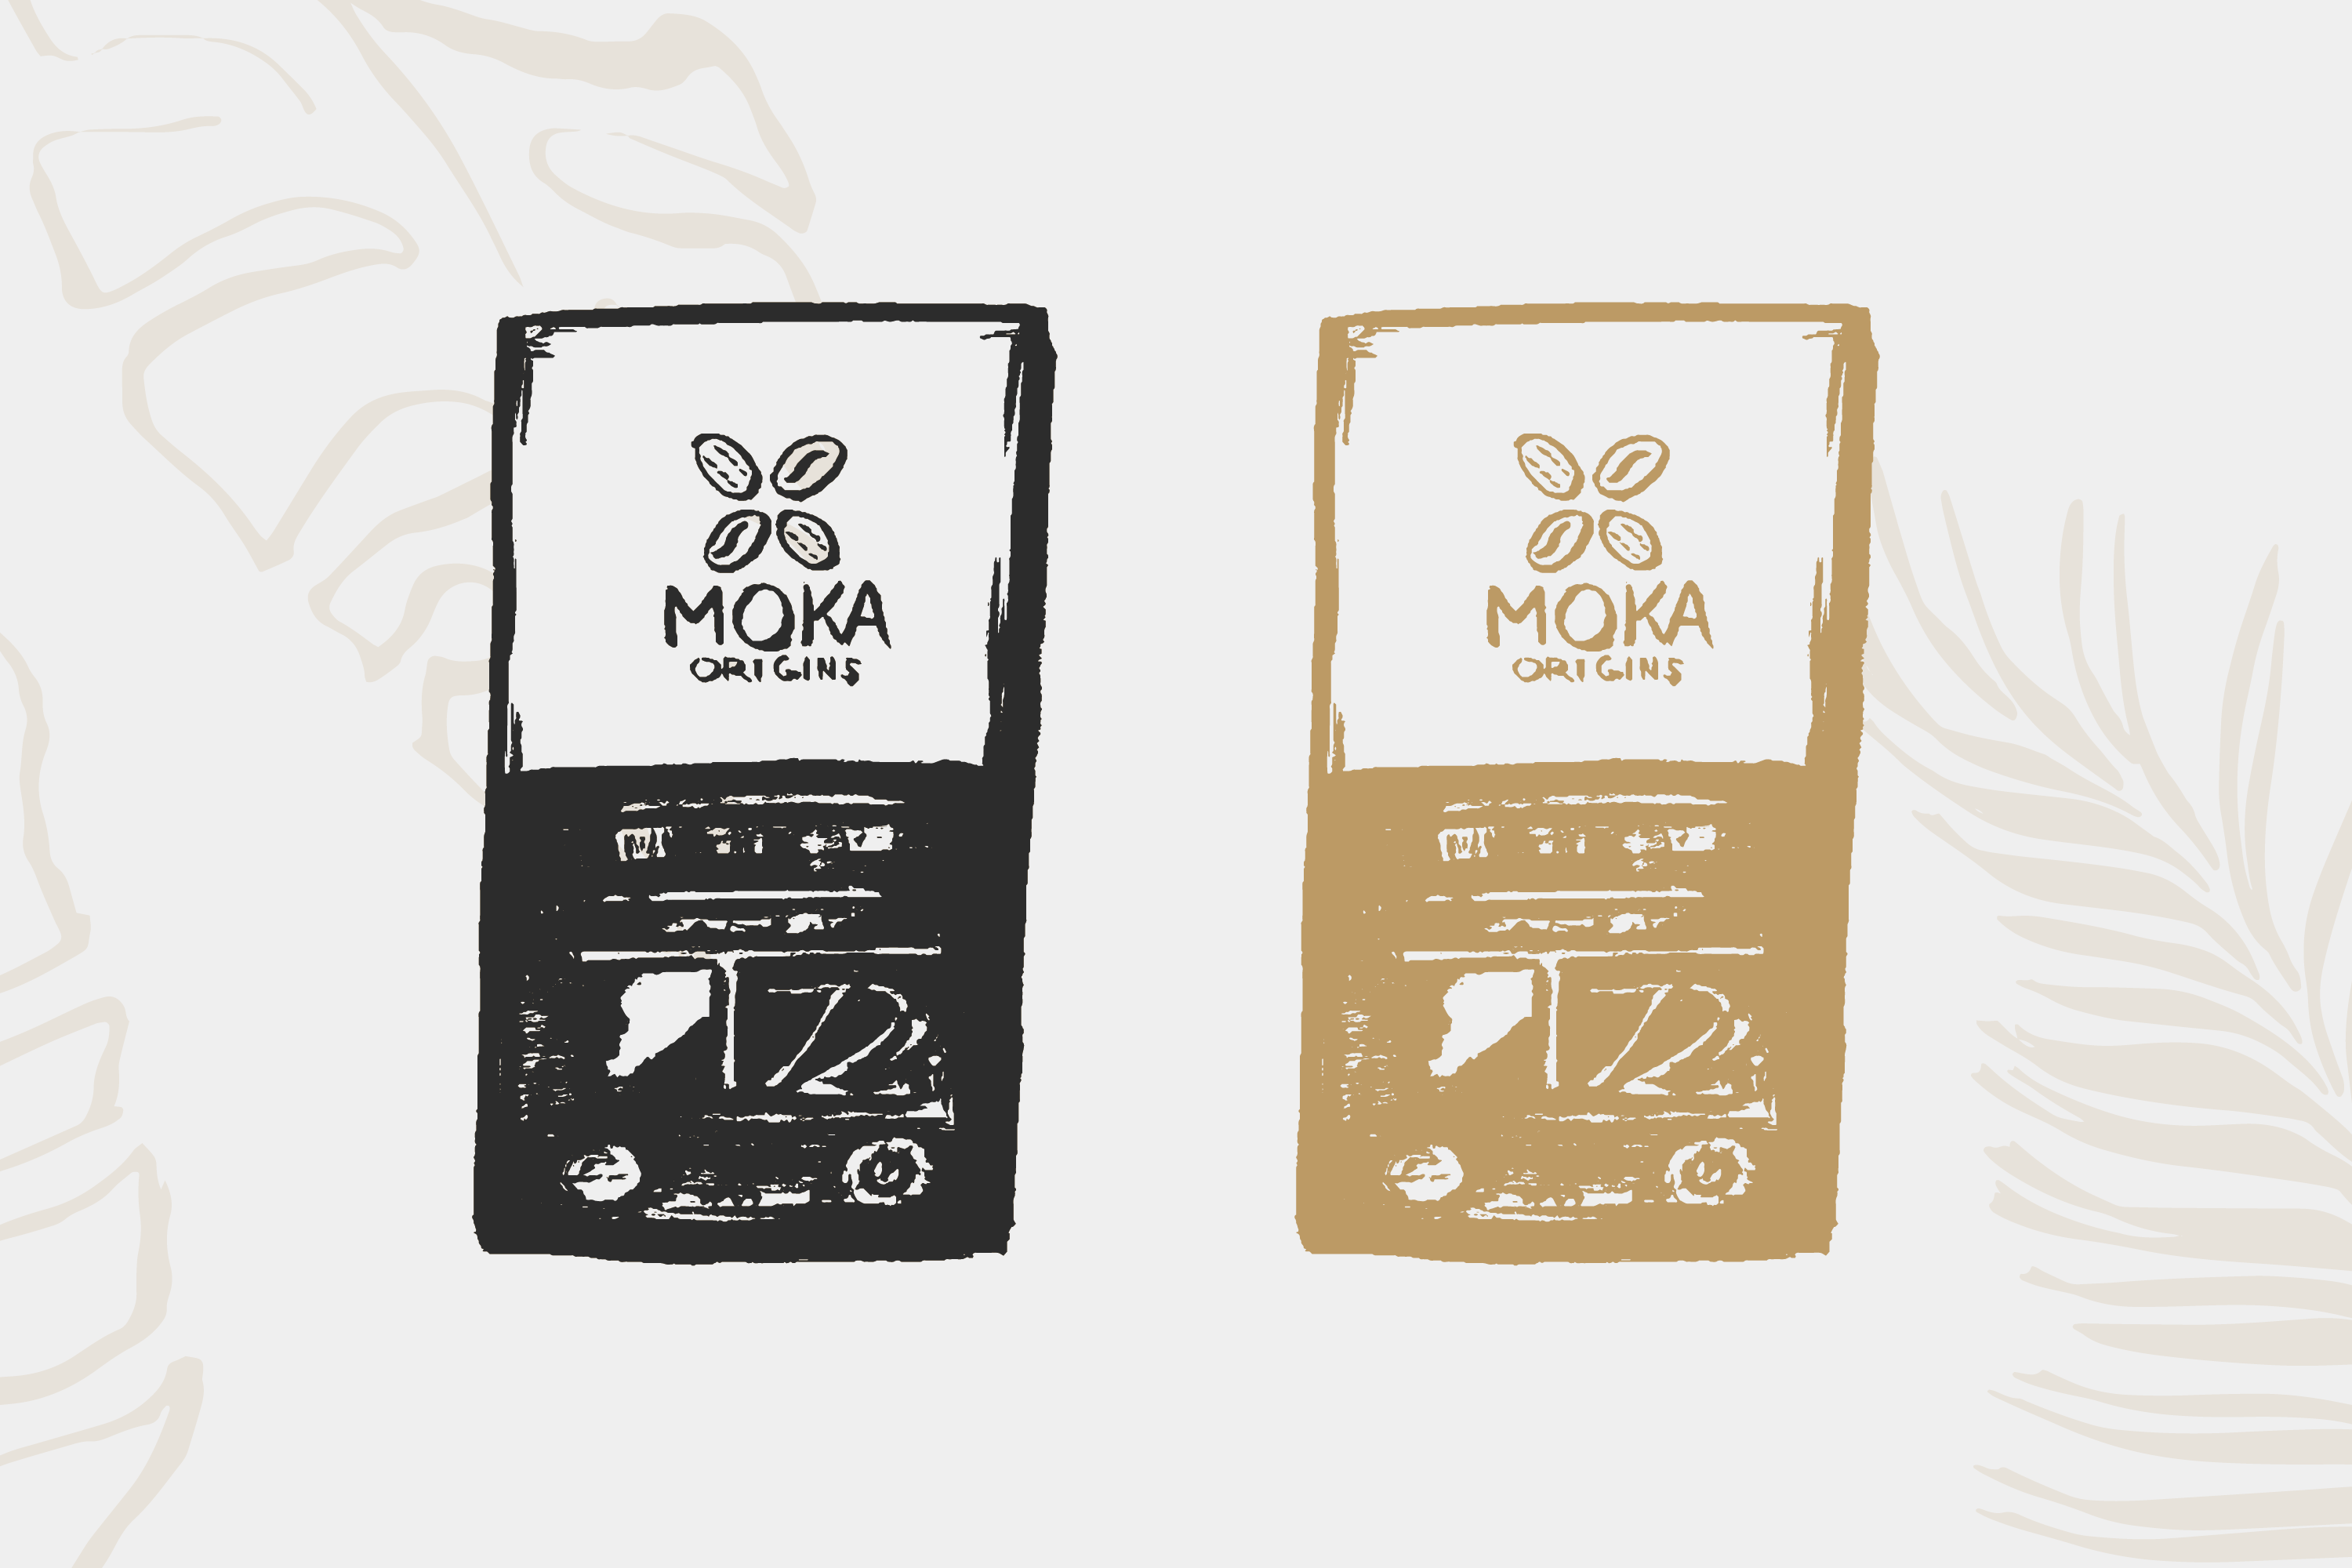 MOKA Gift Cards